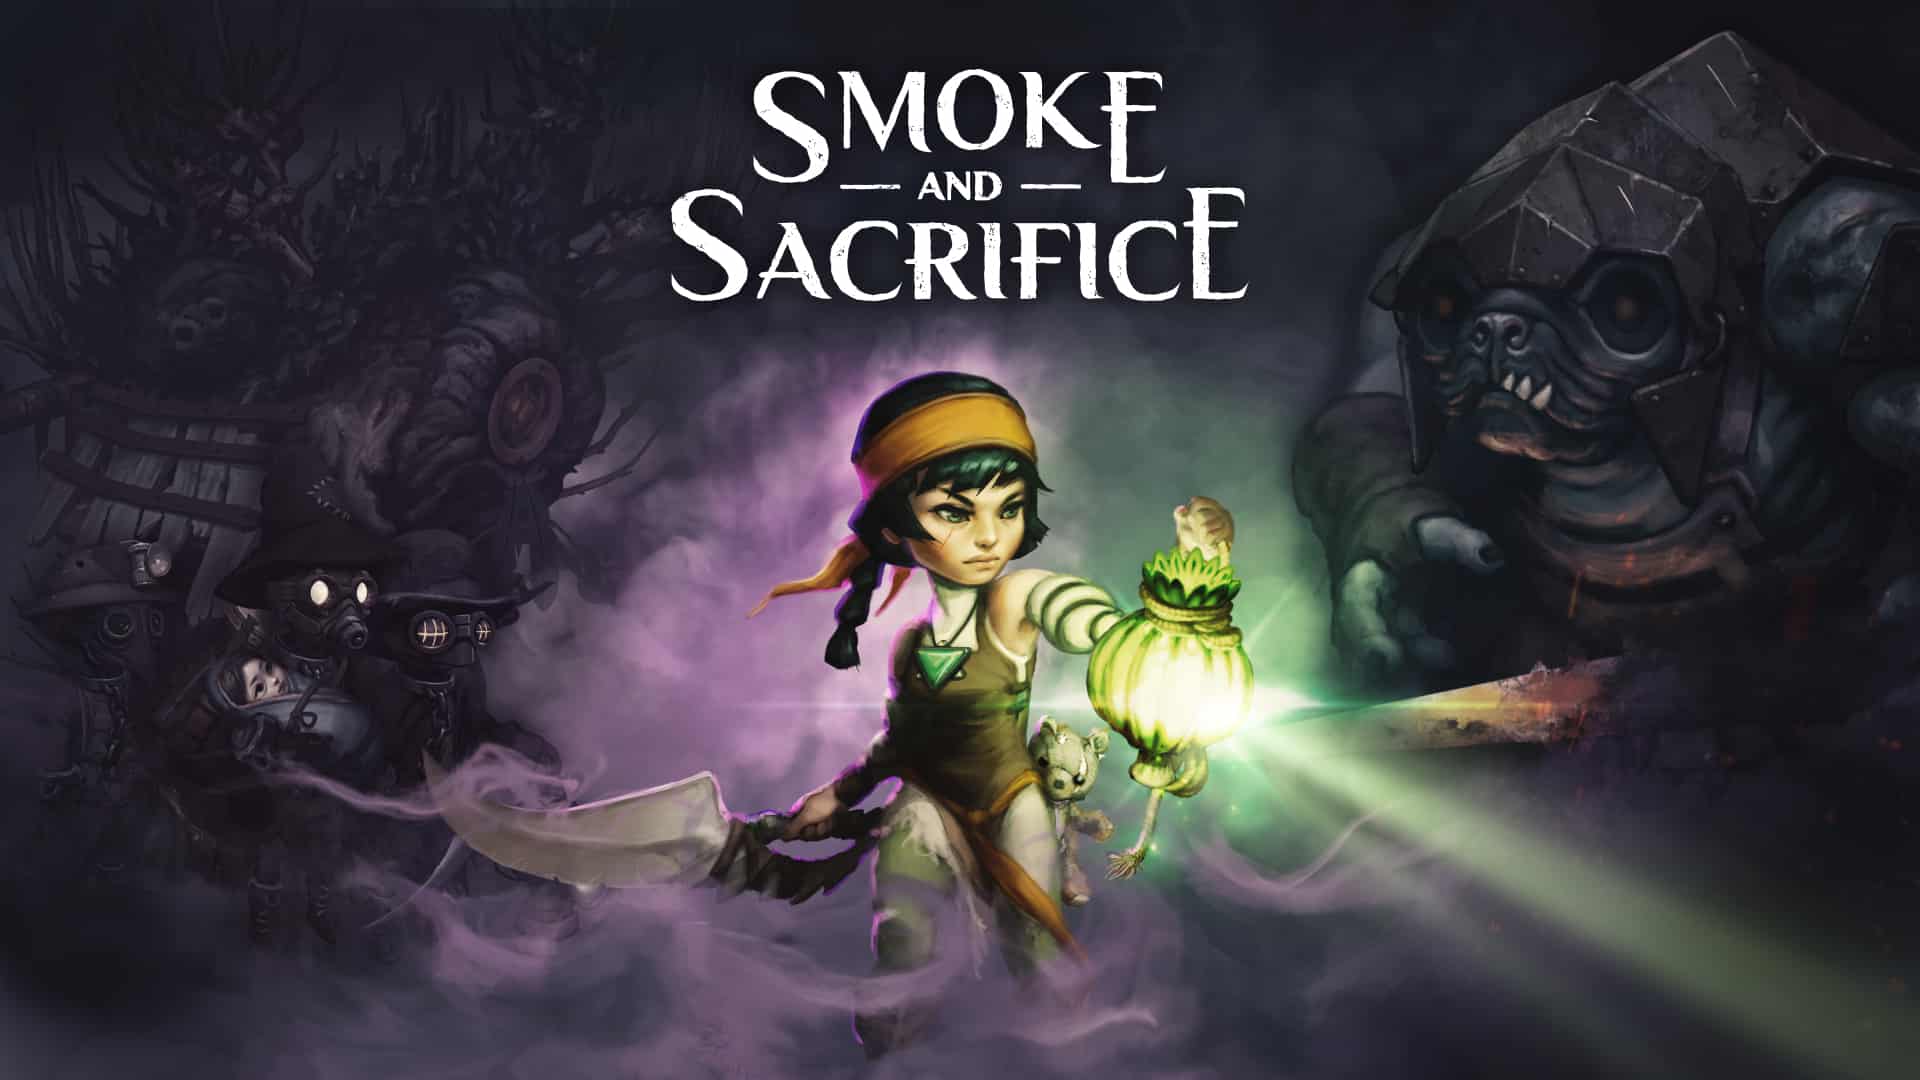 Smoke and Sacrifice player count stats